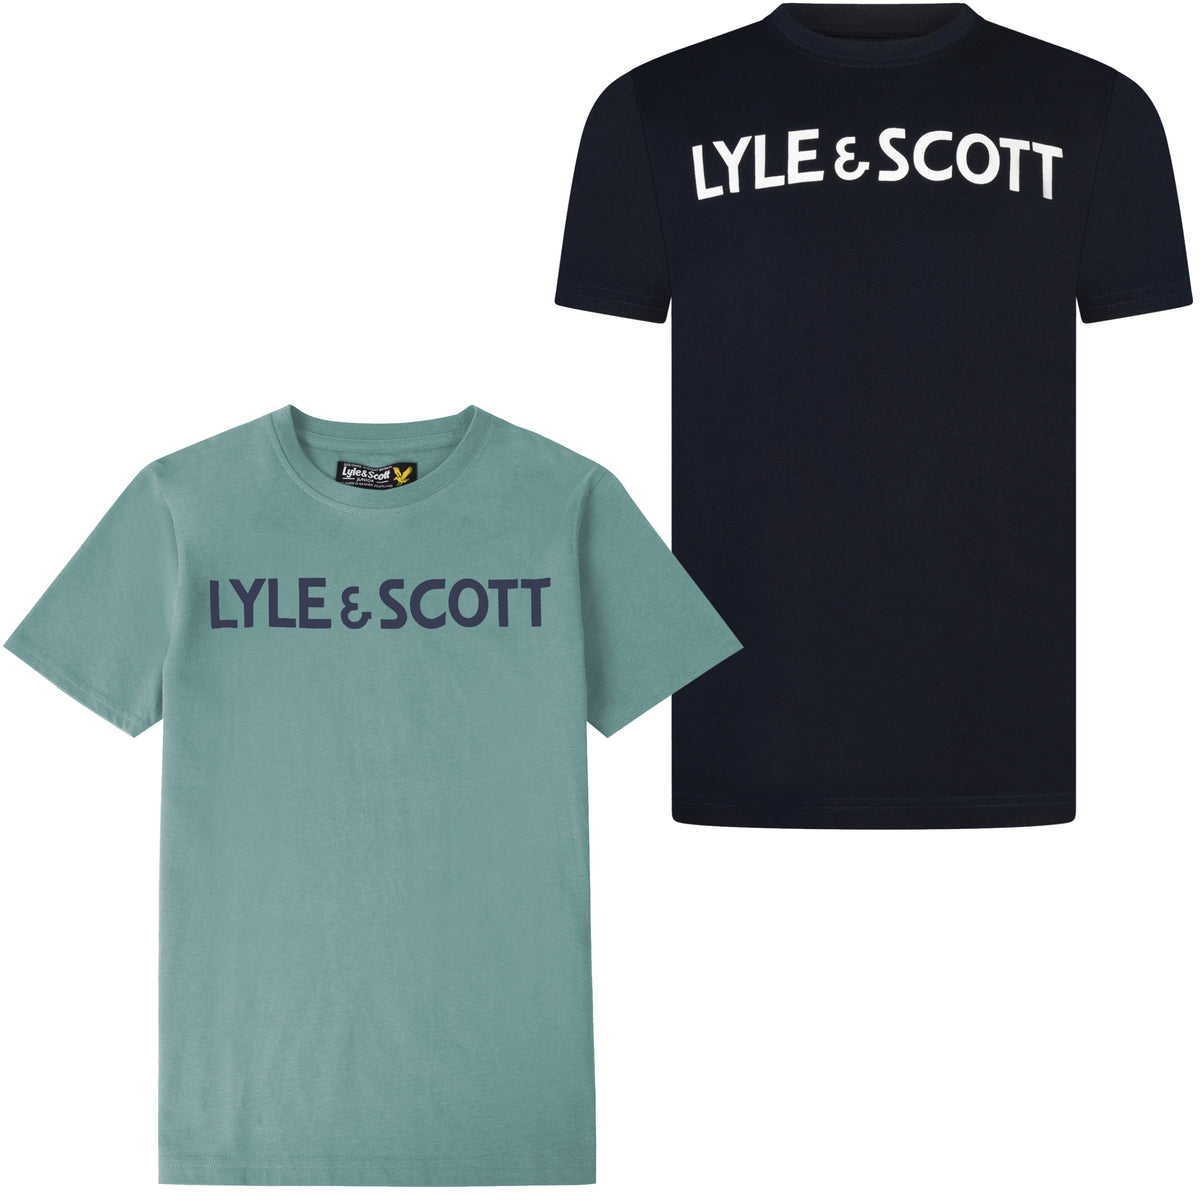 Lyle & Scott Boys 'Text Tee' Short Sleeved T-Shirt, 01, Lsc0896